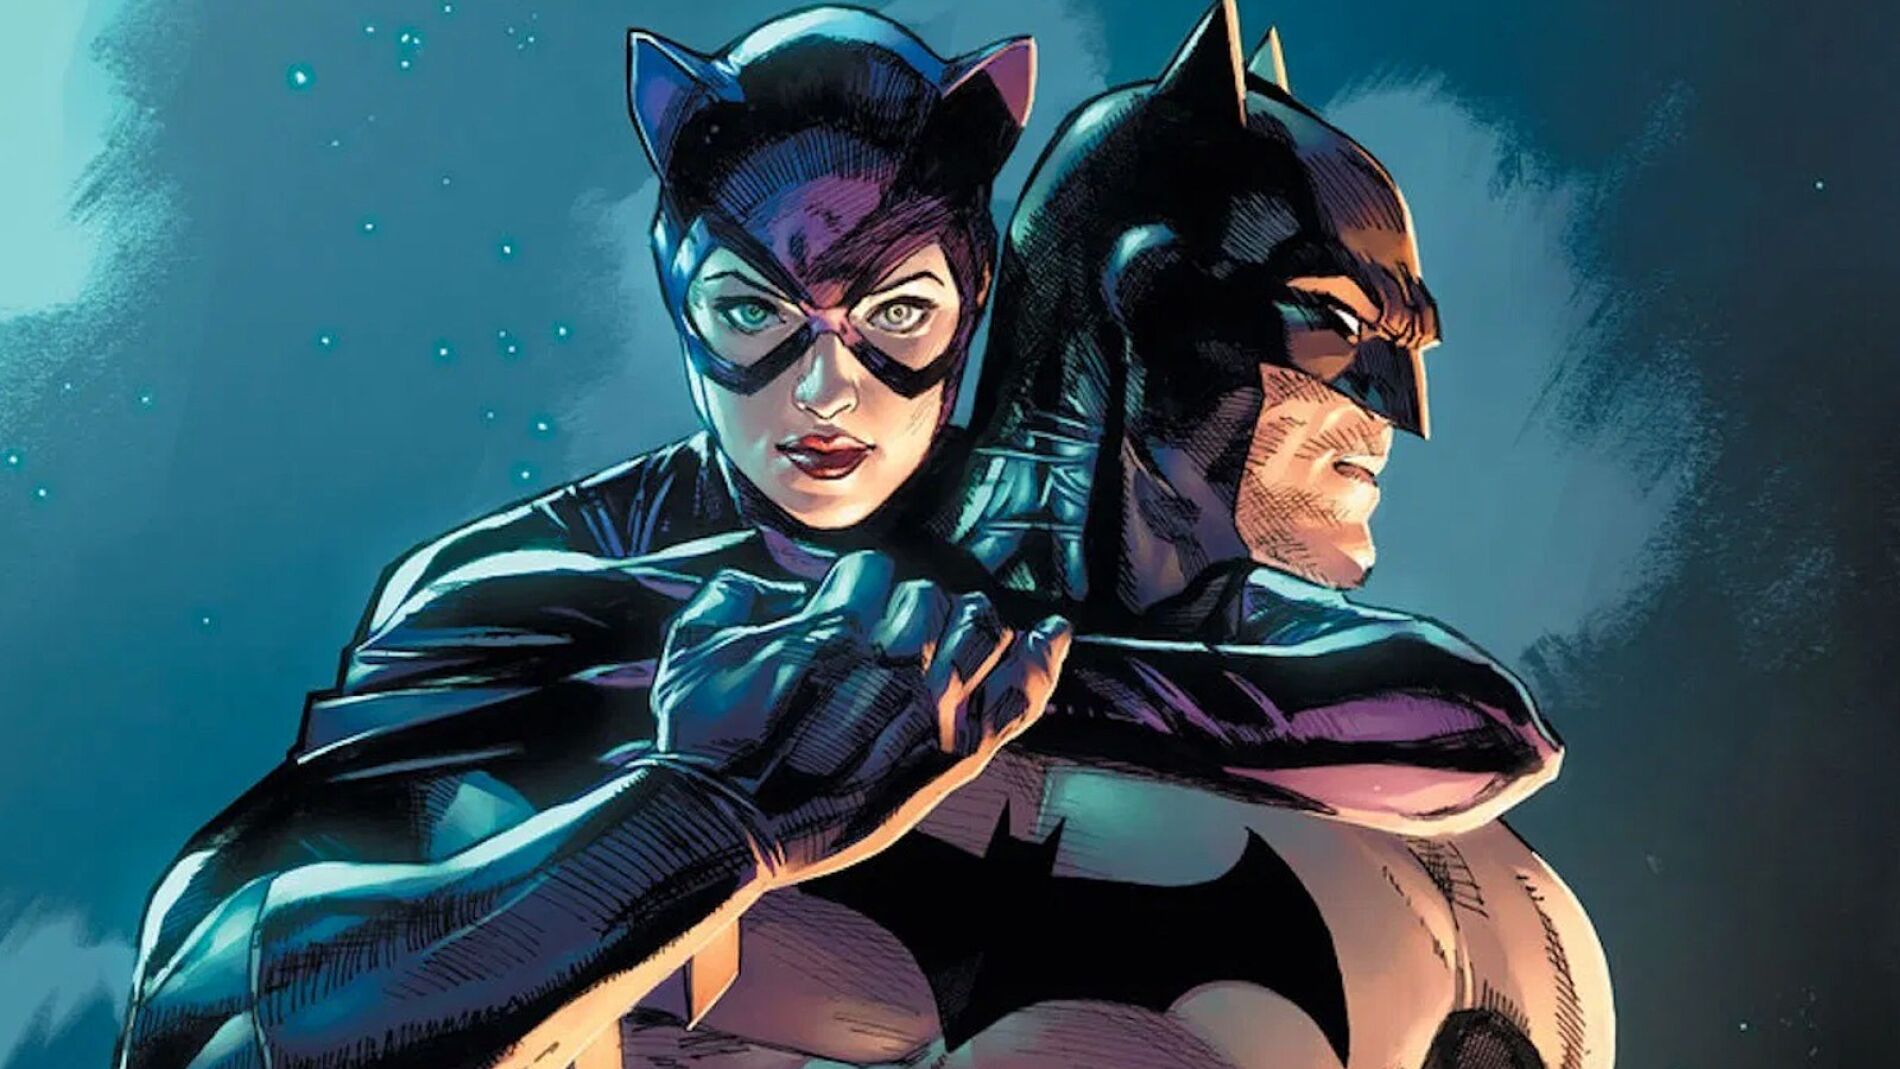 Polémica sobre la vida sexual de Batman en la serie animada “Harley Quinn” imagen